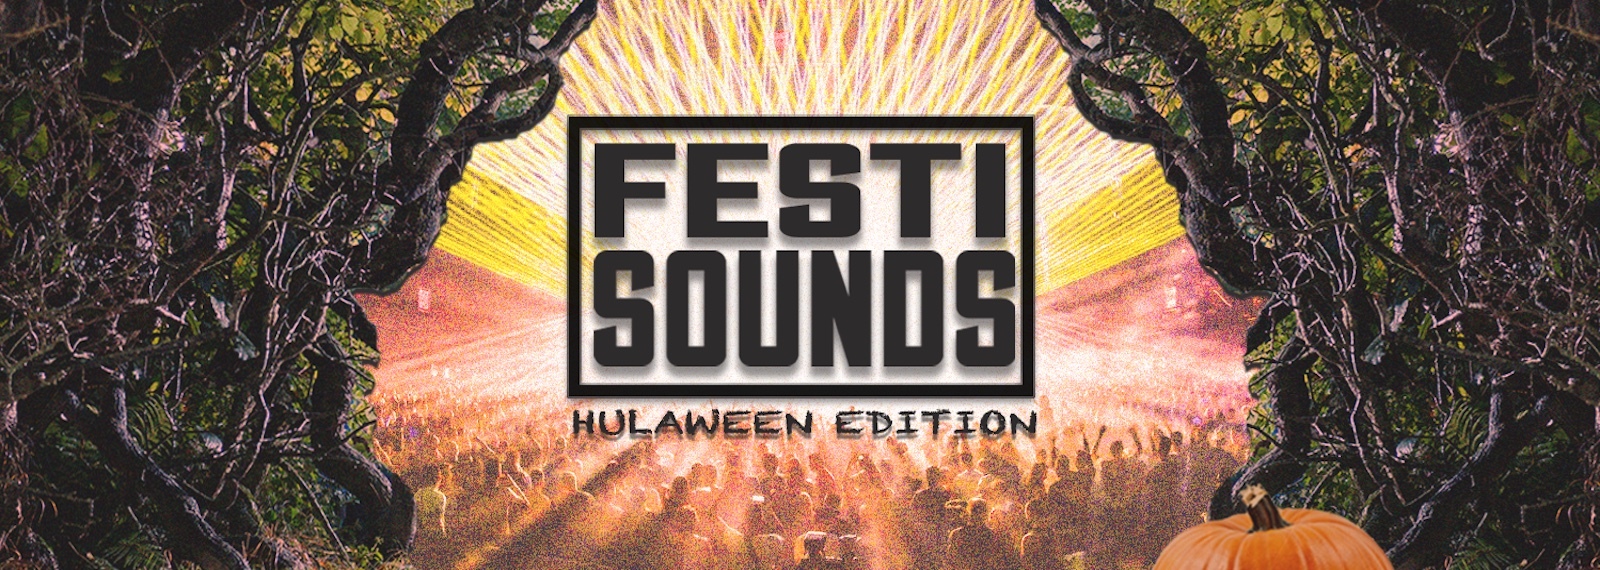 Festi Sounds